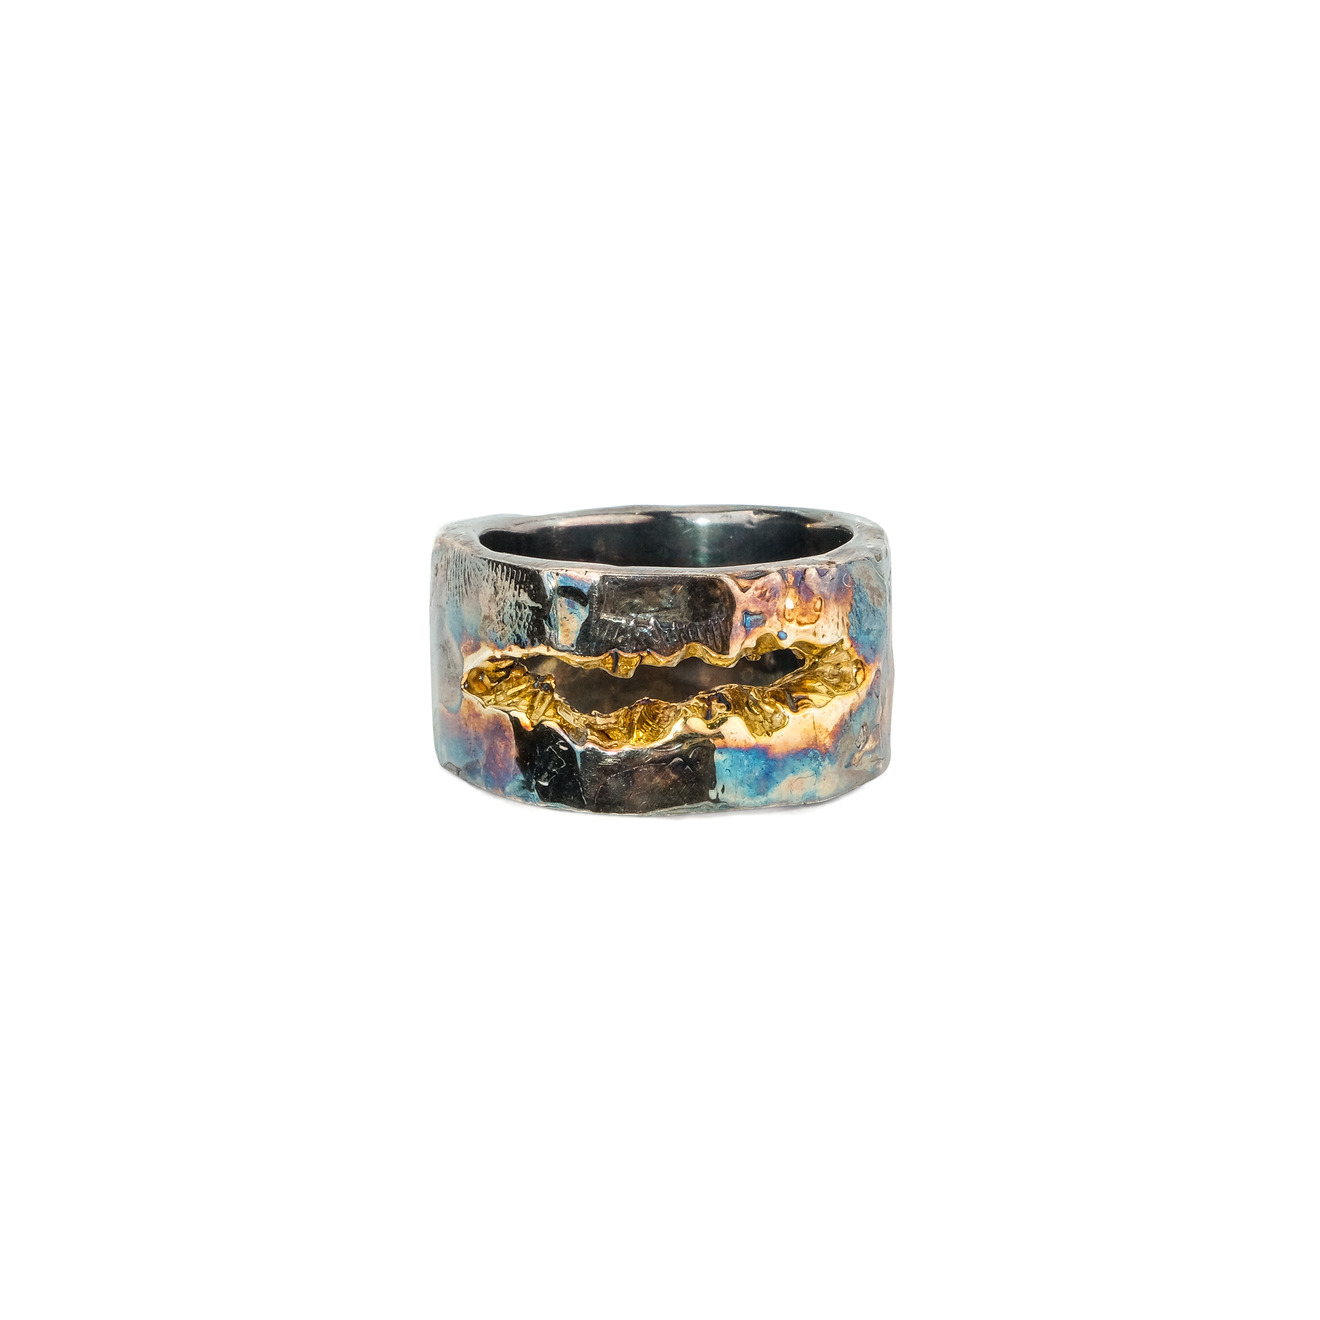 Kintsugi Jewelry Кольцо Forgiveness из серебра с позолотой кольцо с 49 шпинелью из серебра с позолотой